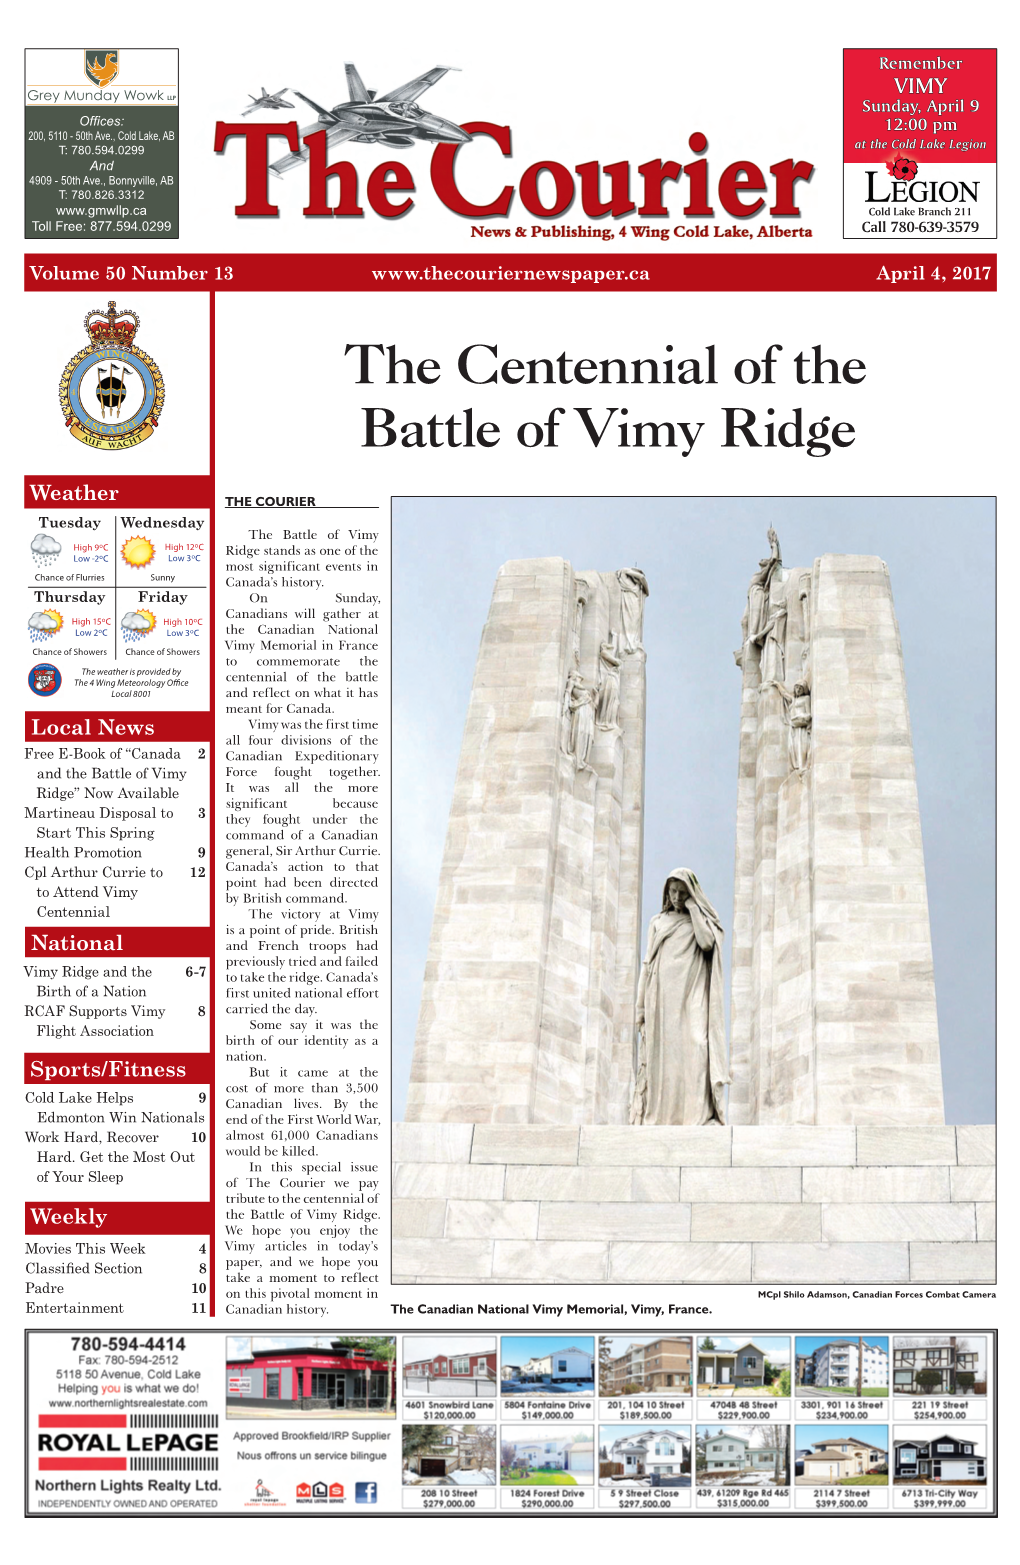 The Centennial of the Battle of Vimy Ridge